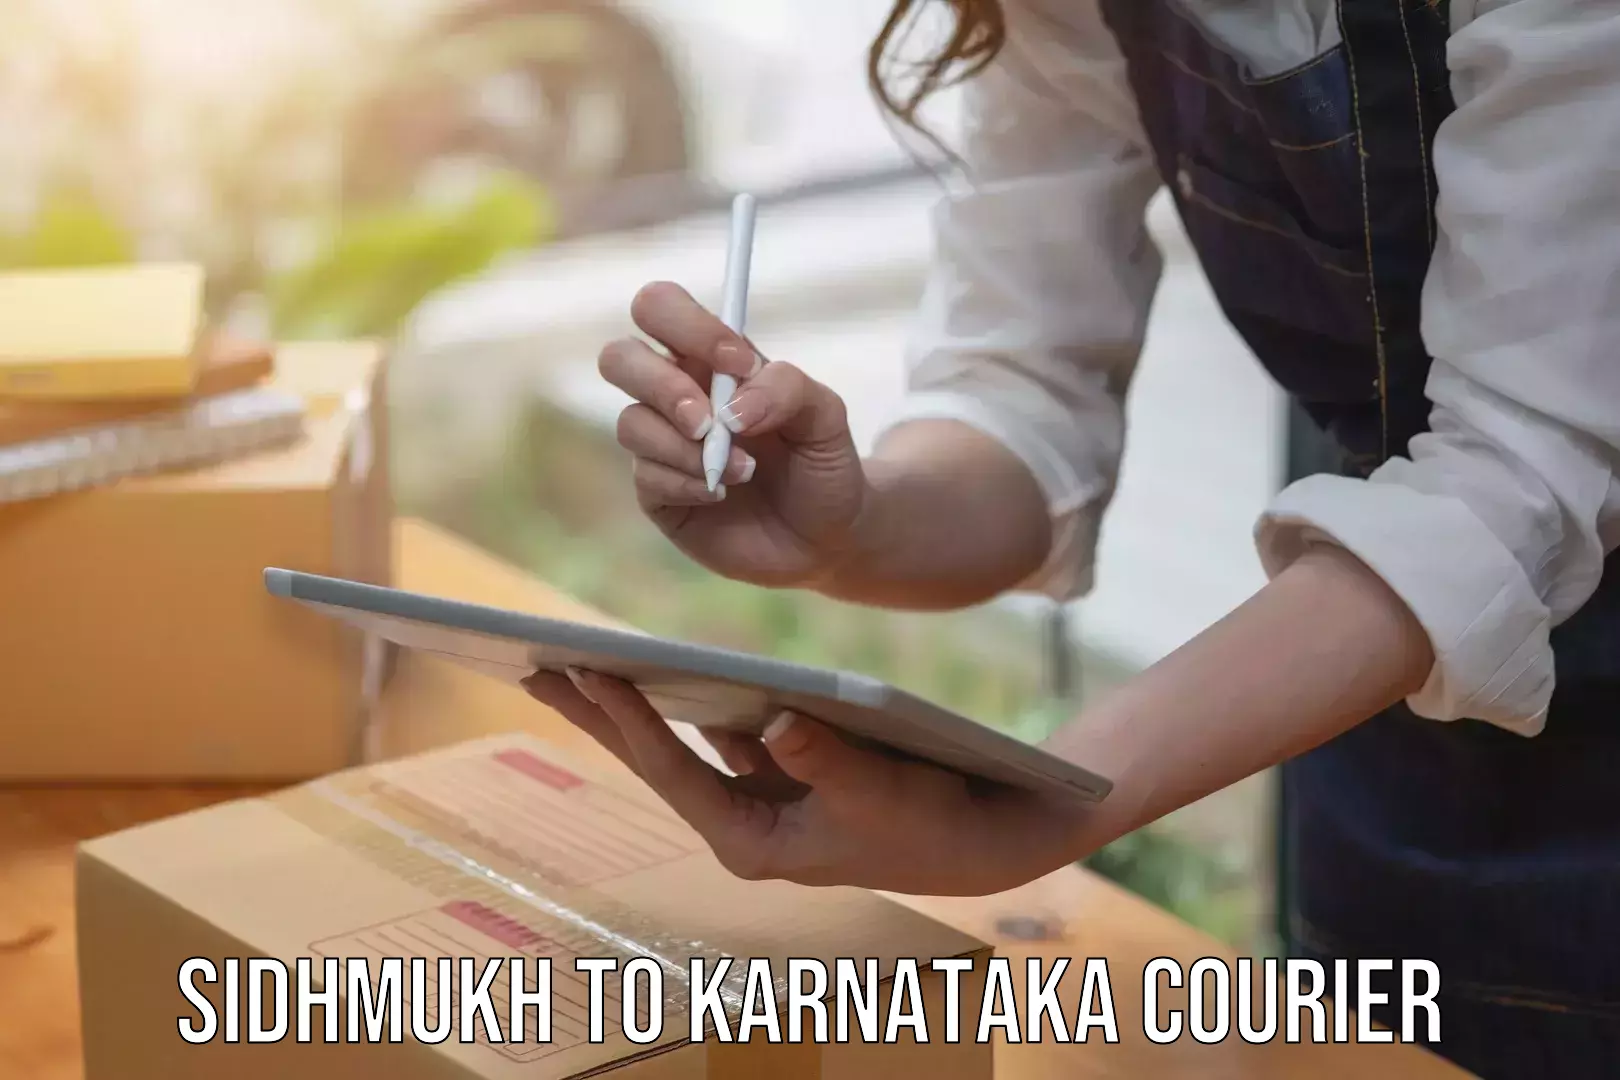 Cash on delivery service Sidhmukh to Karnataka